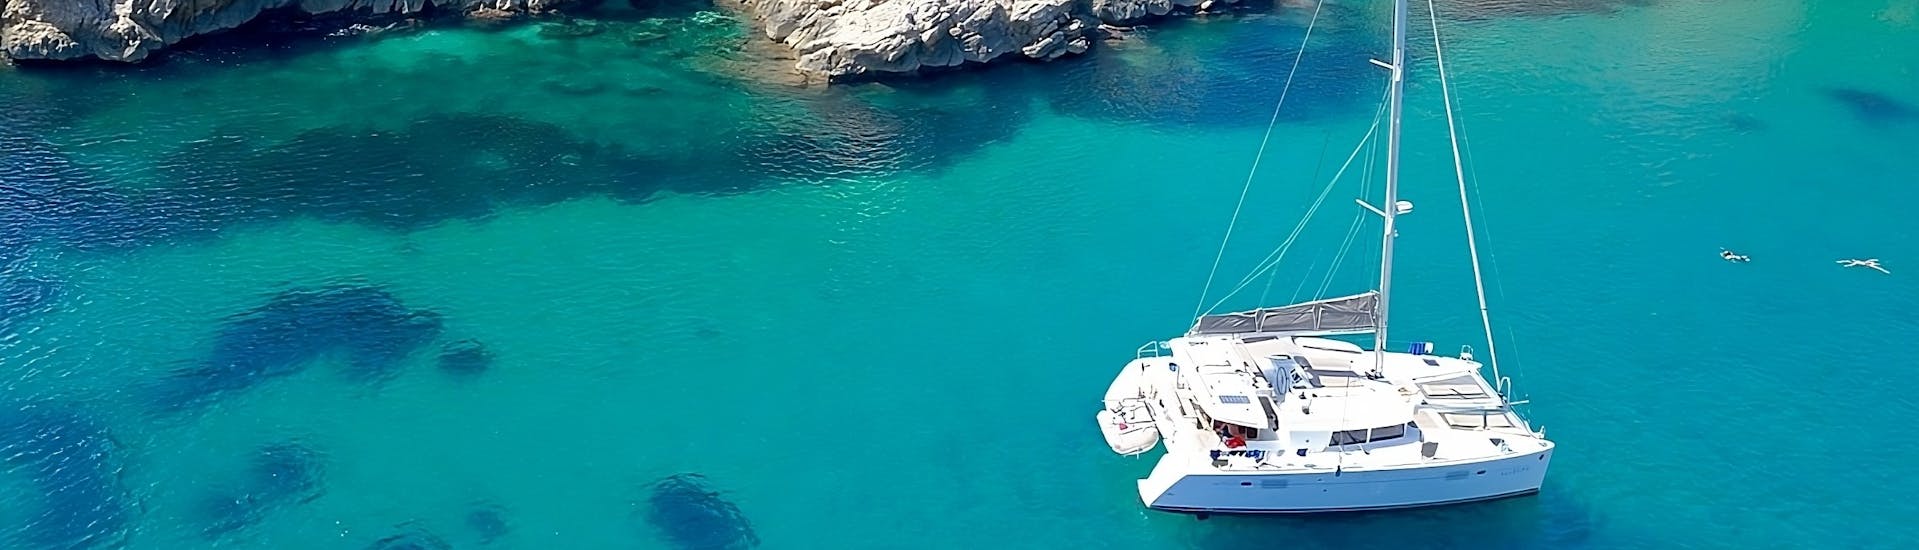 Prive Bachelor Party boottocht naar Formentera vanuit Ibiza.